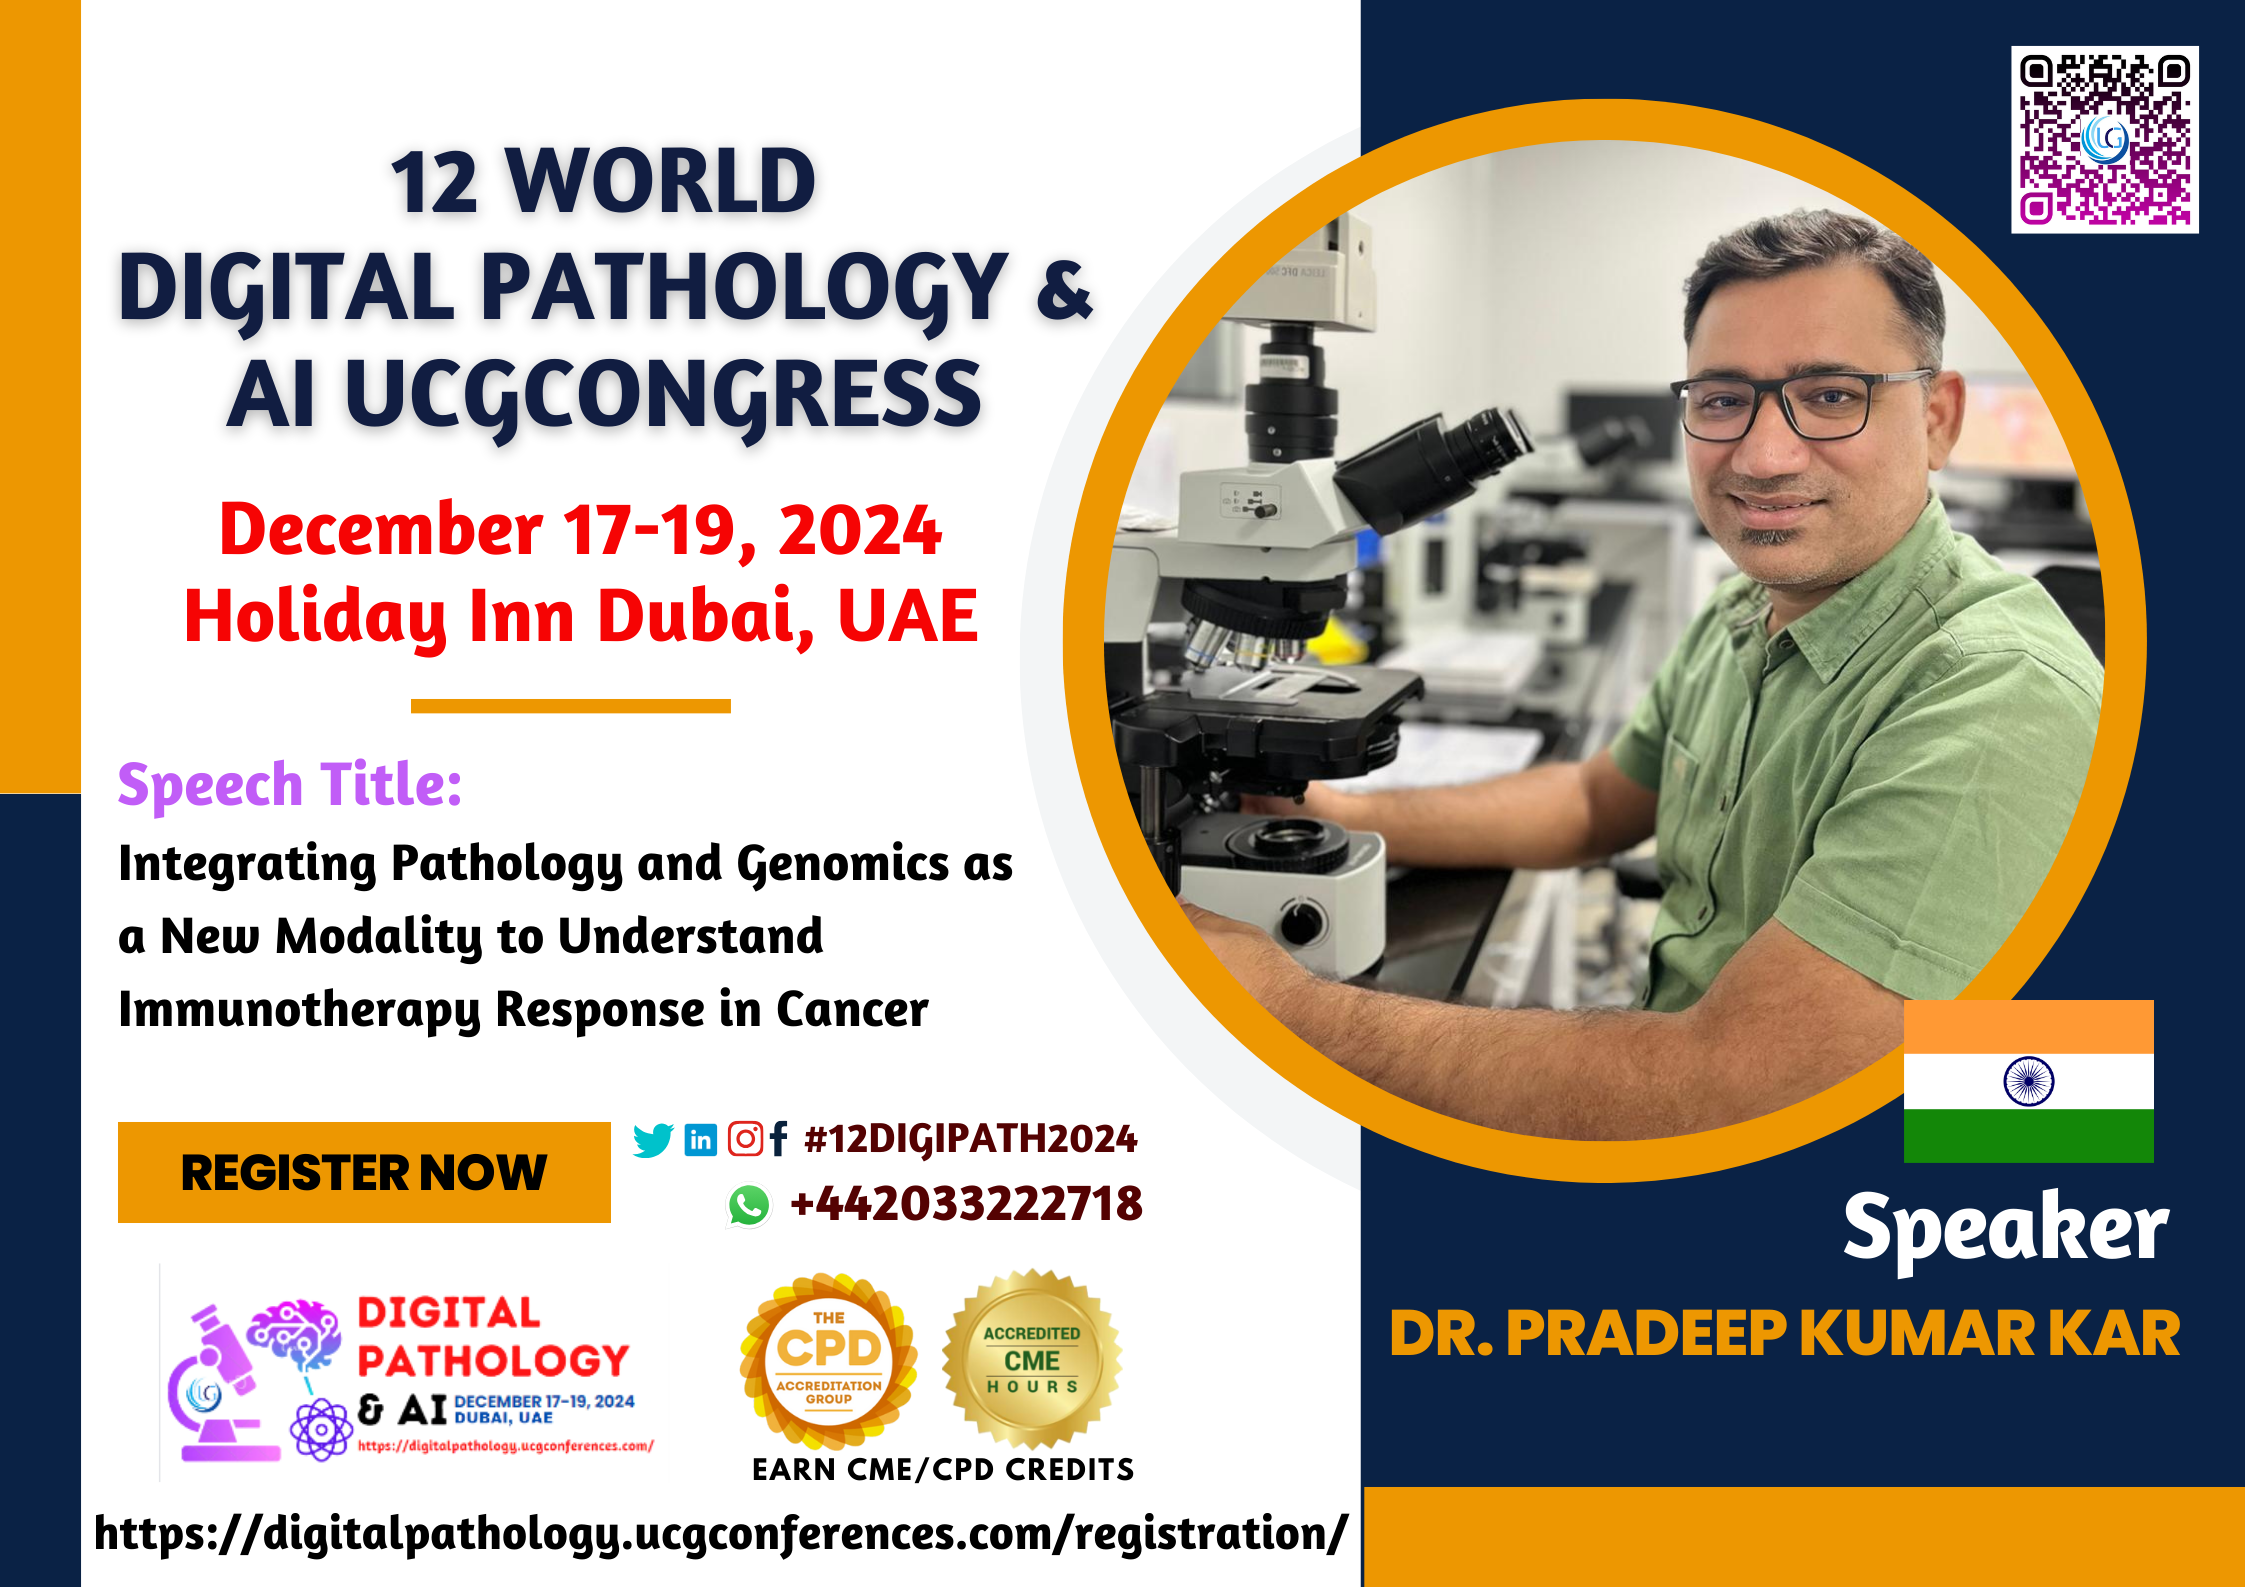 Dr. Pradeep Kumar kar_12 World Digital Pathology & AI UCGCongress